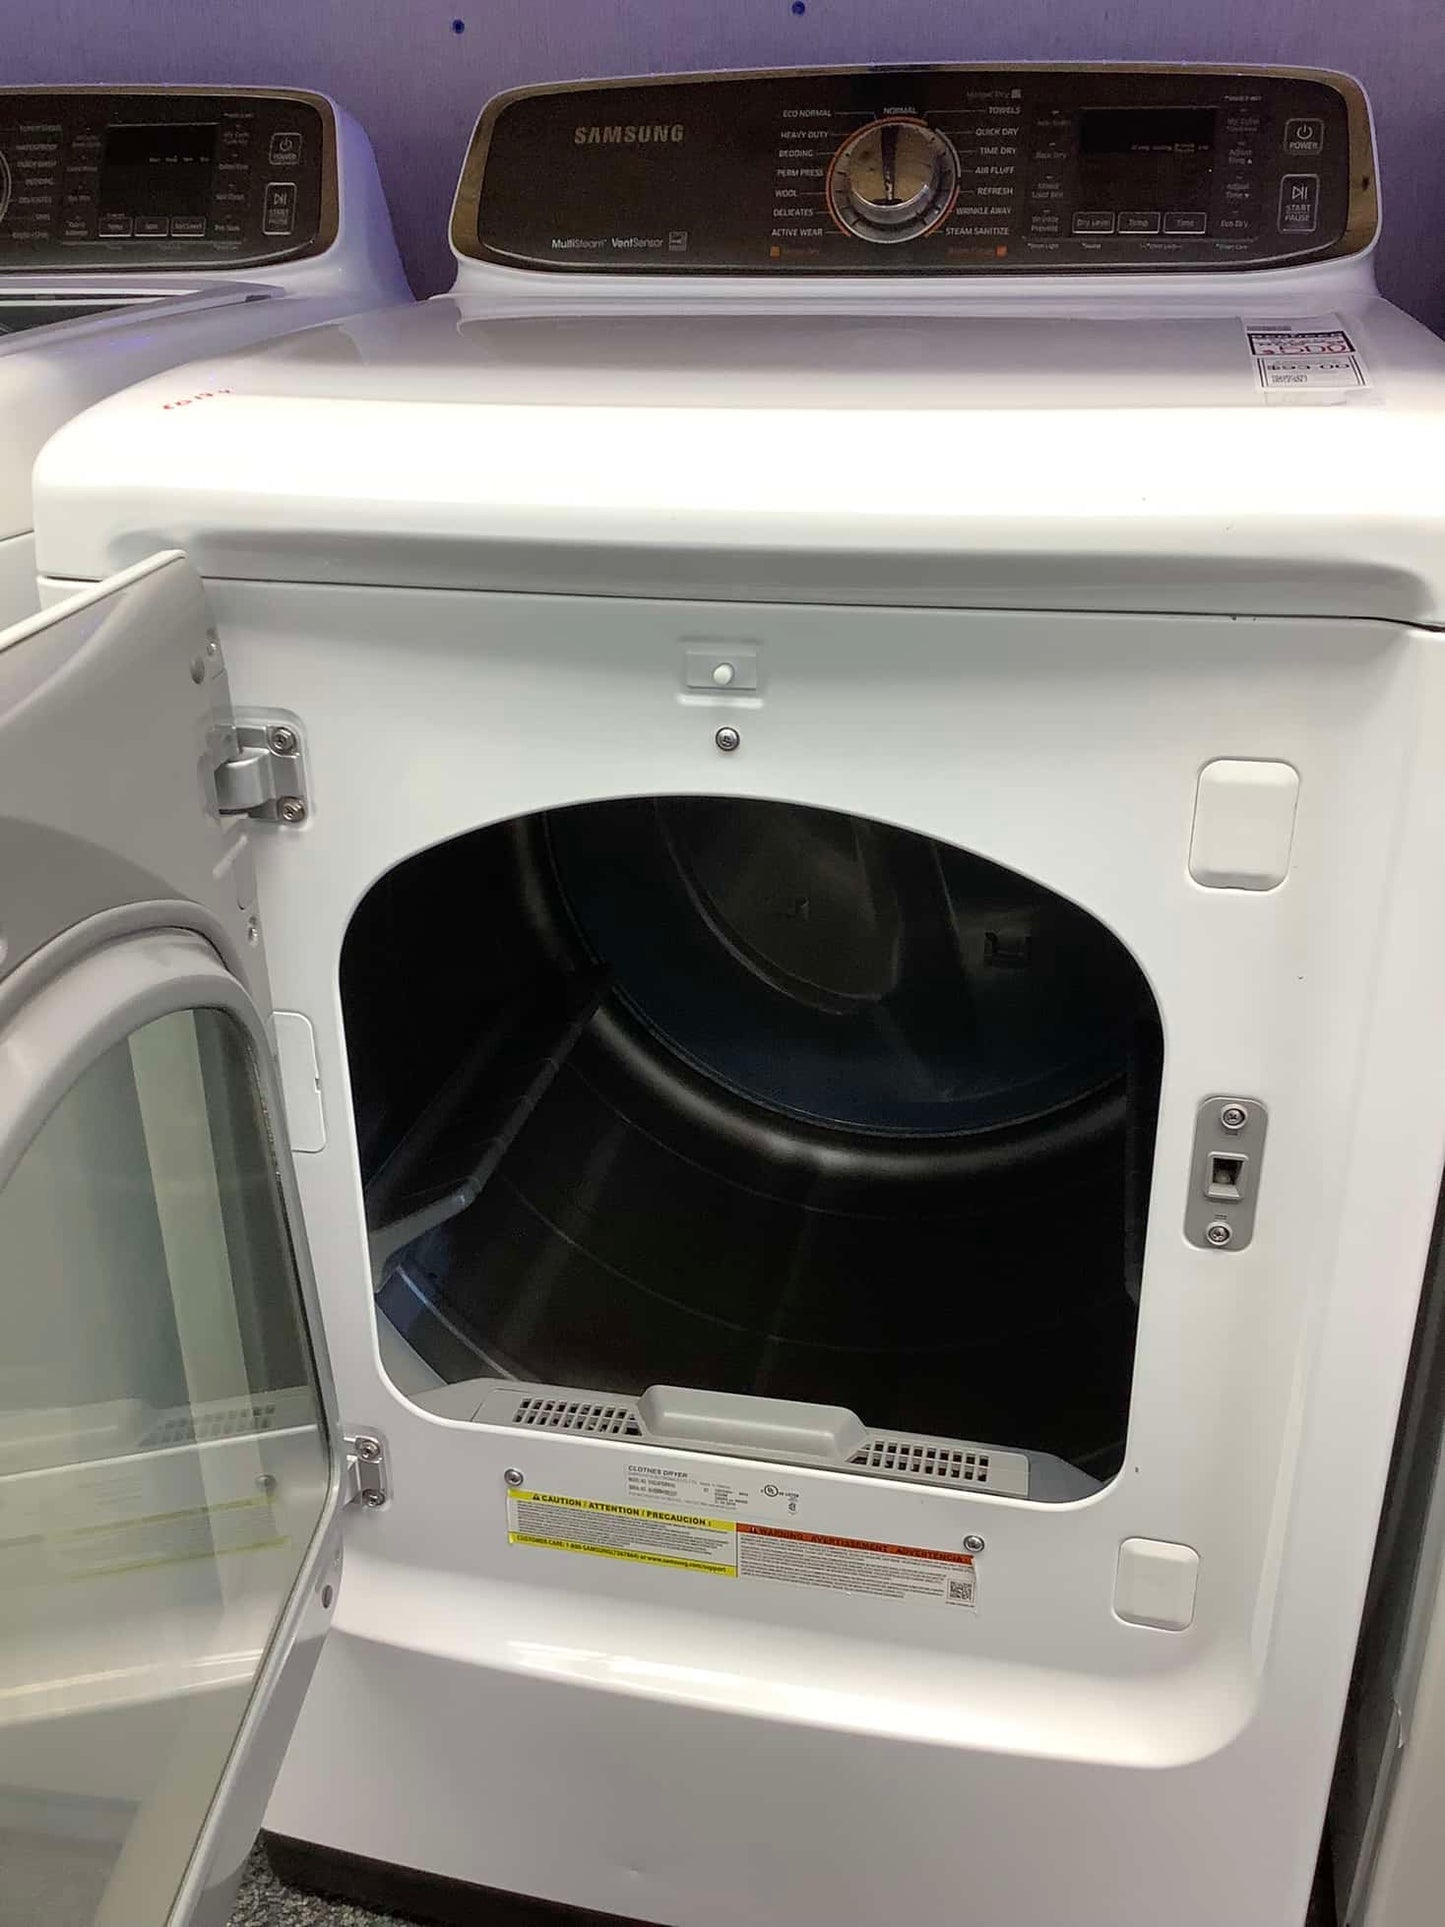 Samsung washer and dryer set electric side x side 220v large capacity